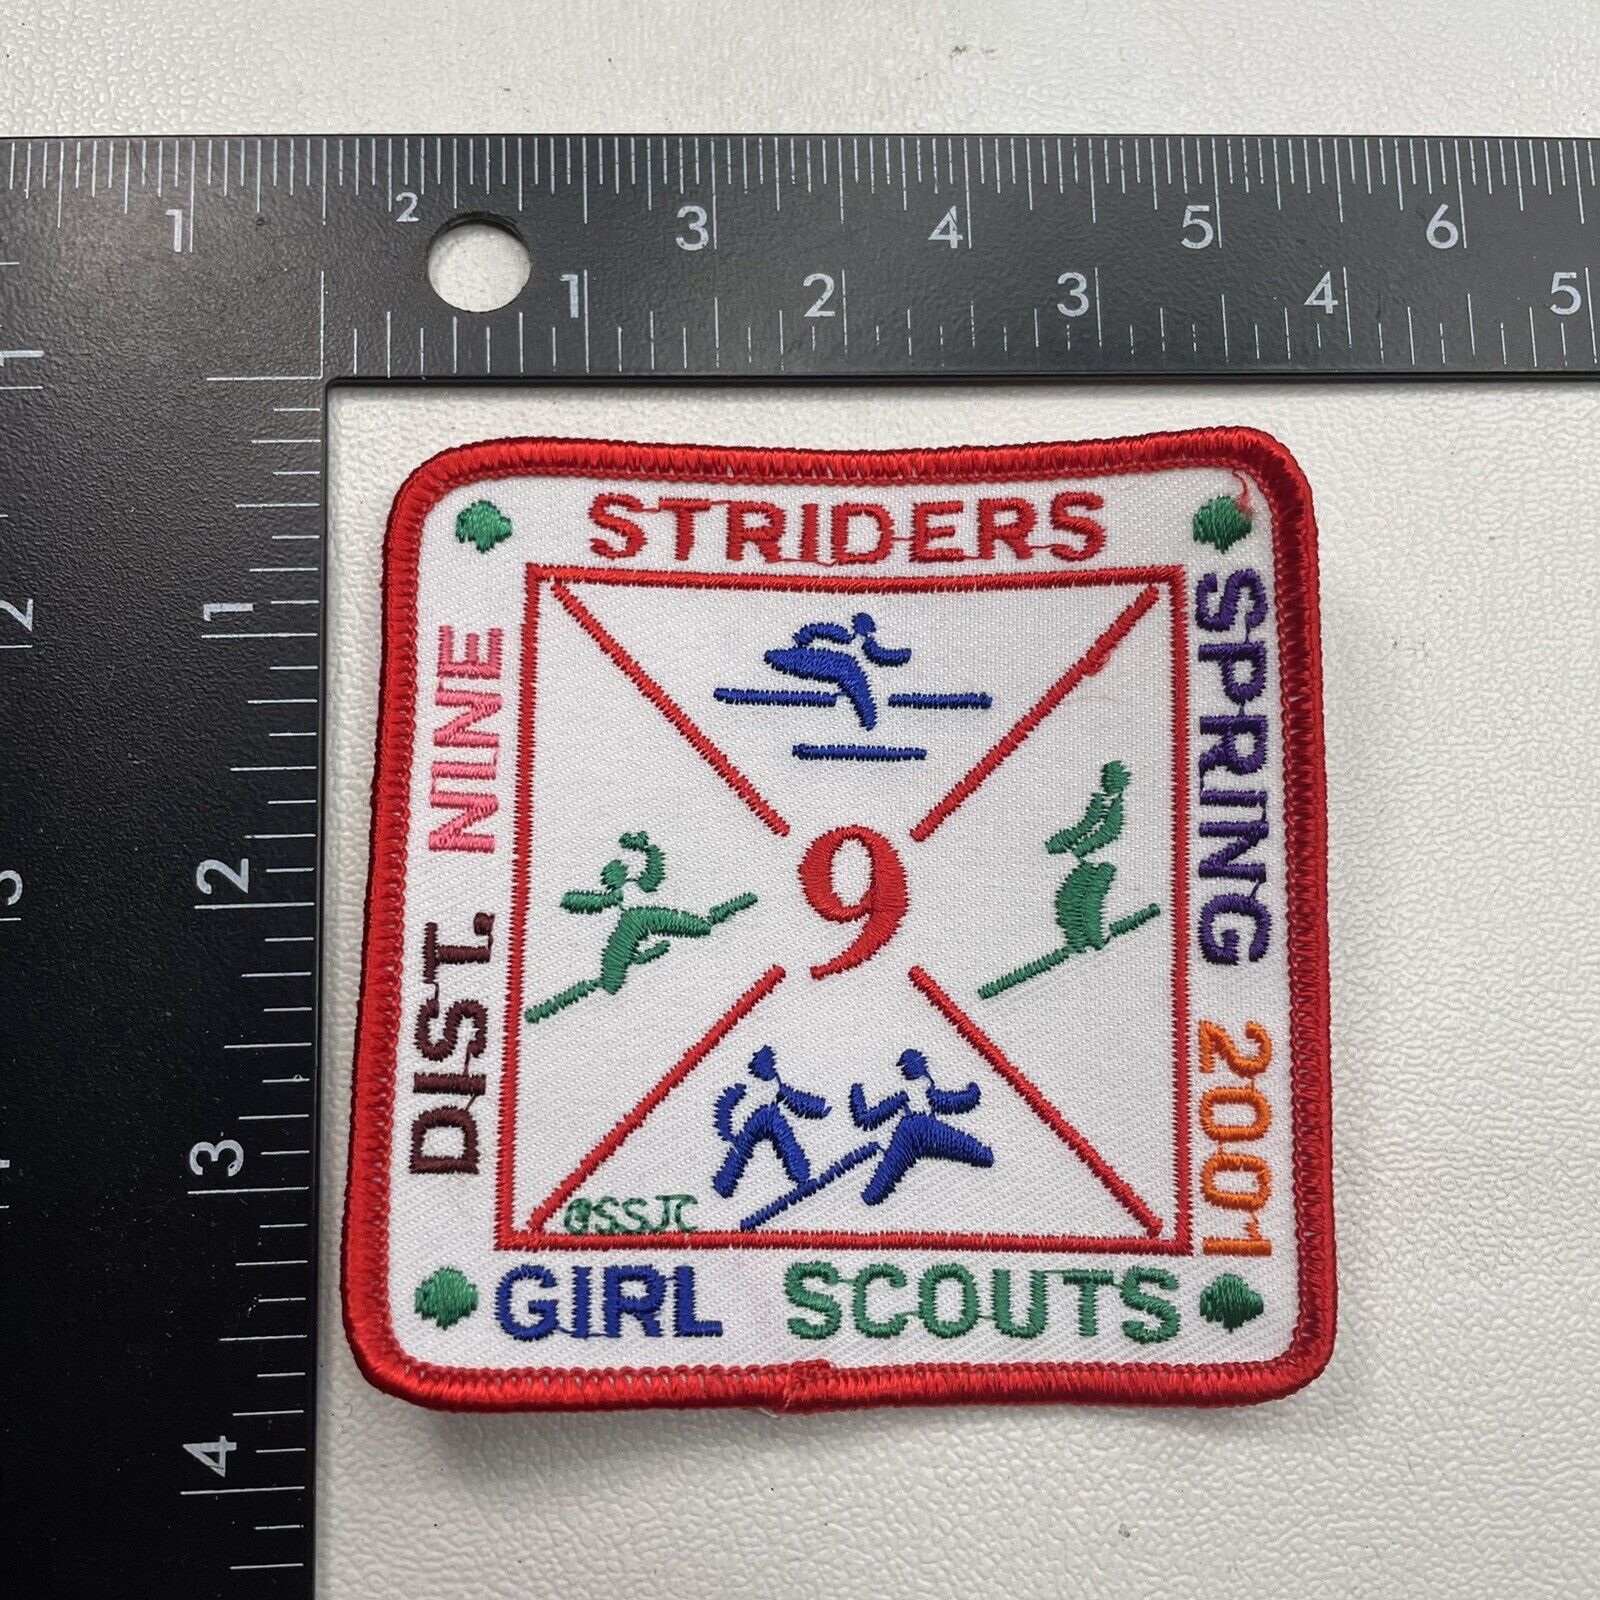 2001 GSSJC District Nine Striders Girl Scouts Patch 19H4